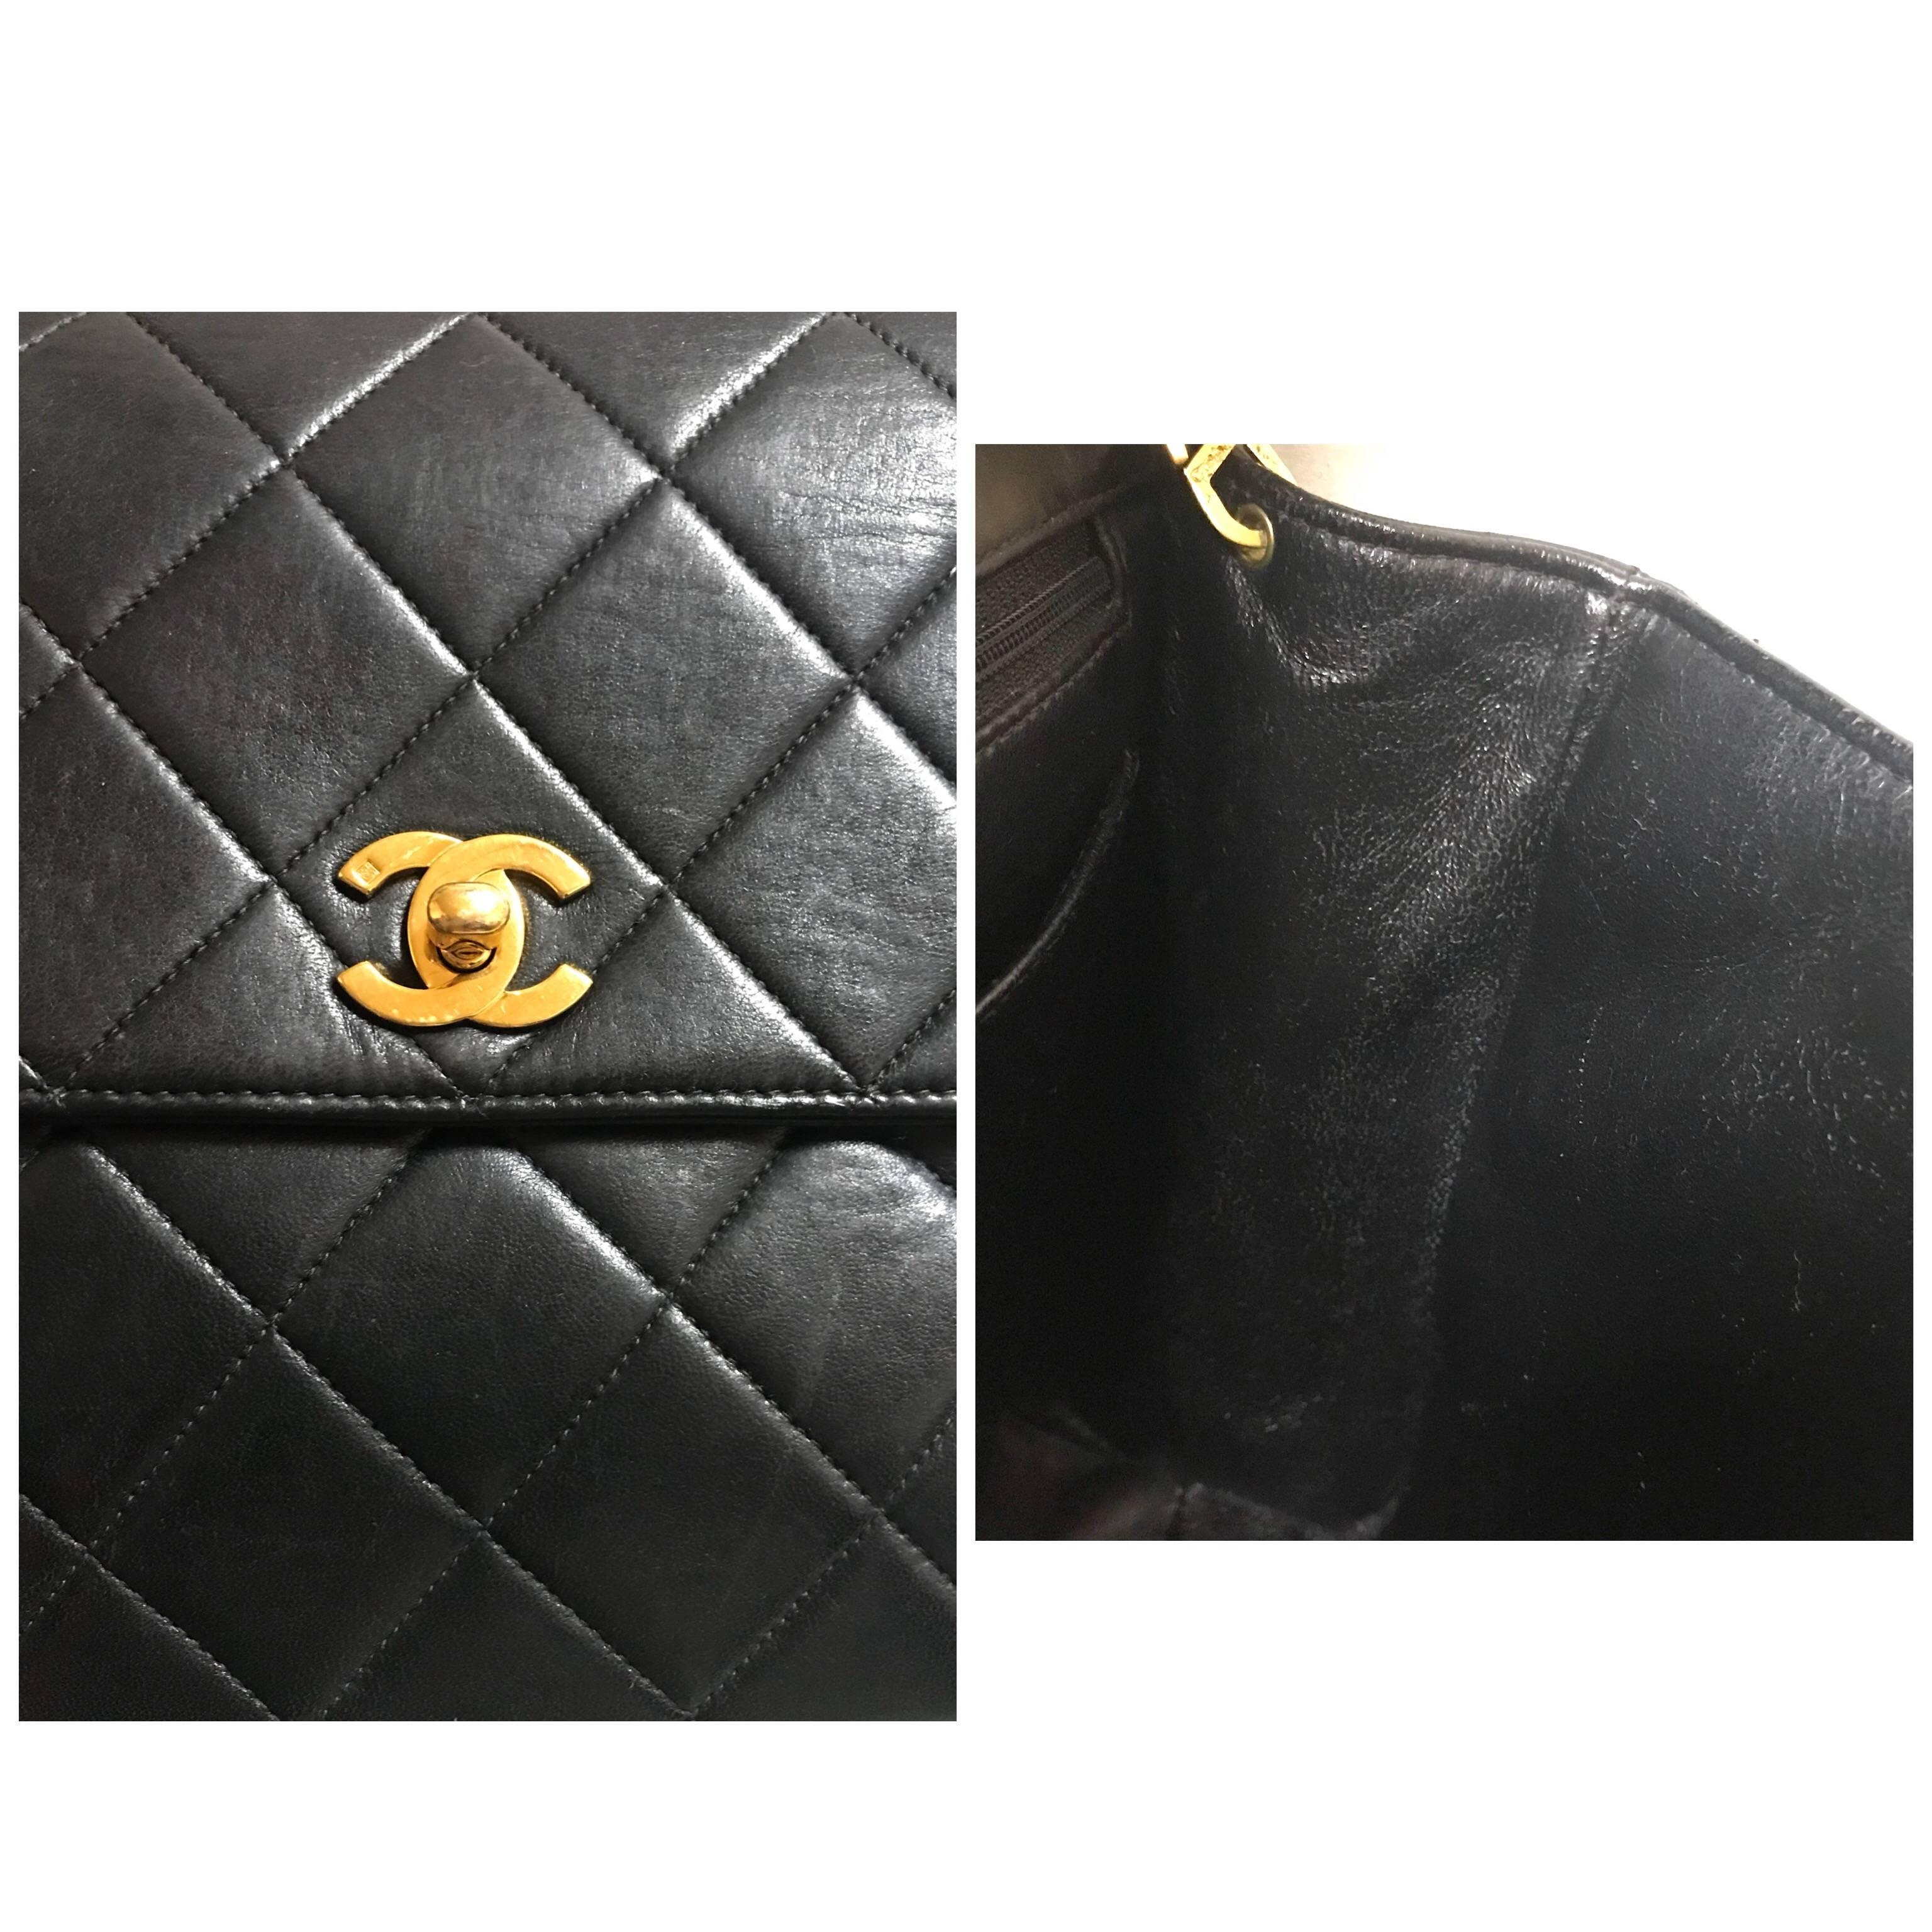 Vintage CHANEL black lamb leather 2.55 classic square shape shoulder bag with cc 13